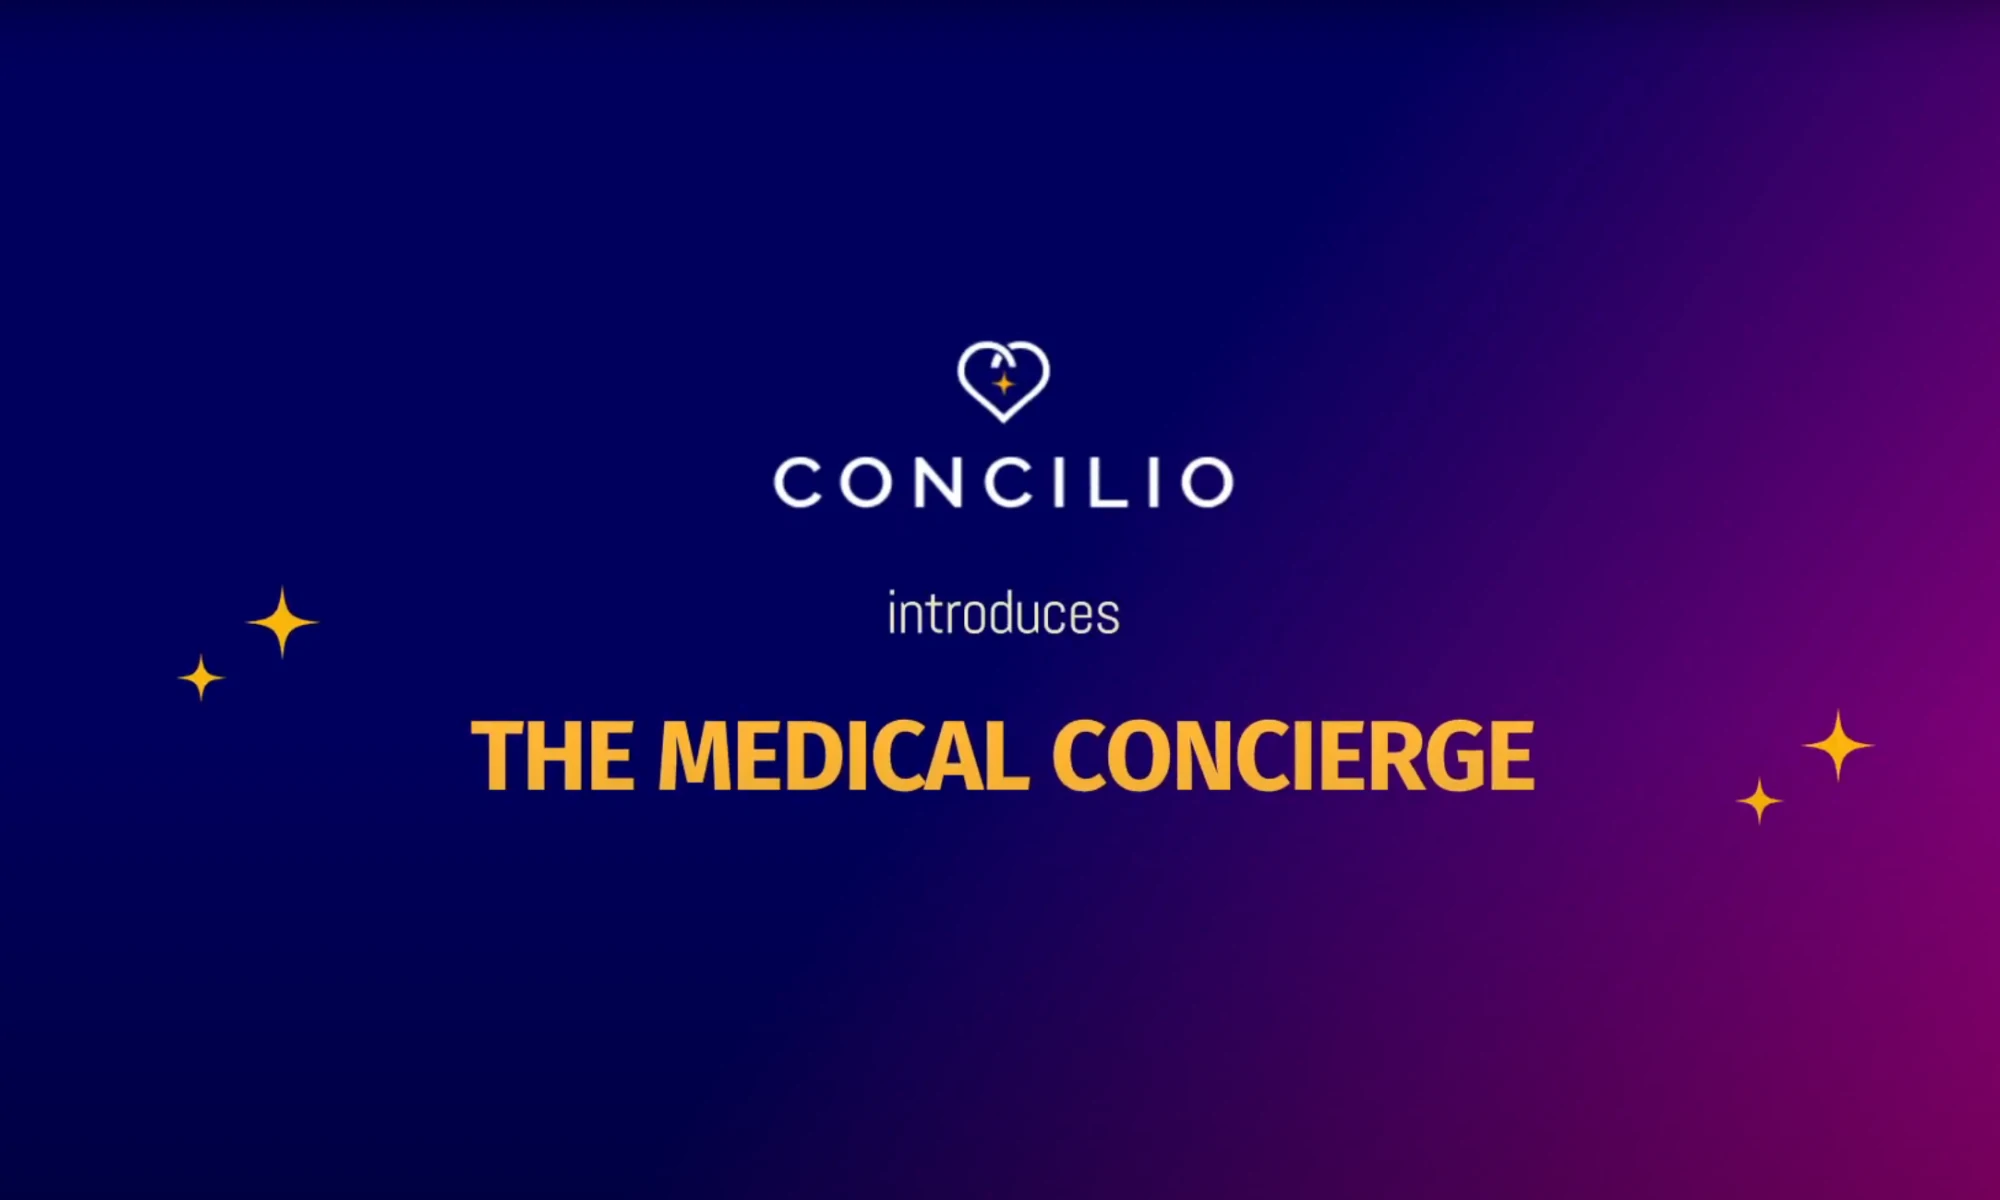 VIDEO - Discover Concilio, the medical concierge